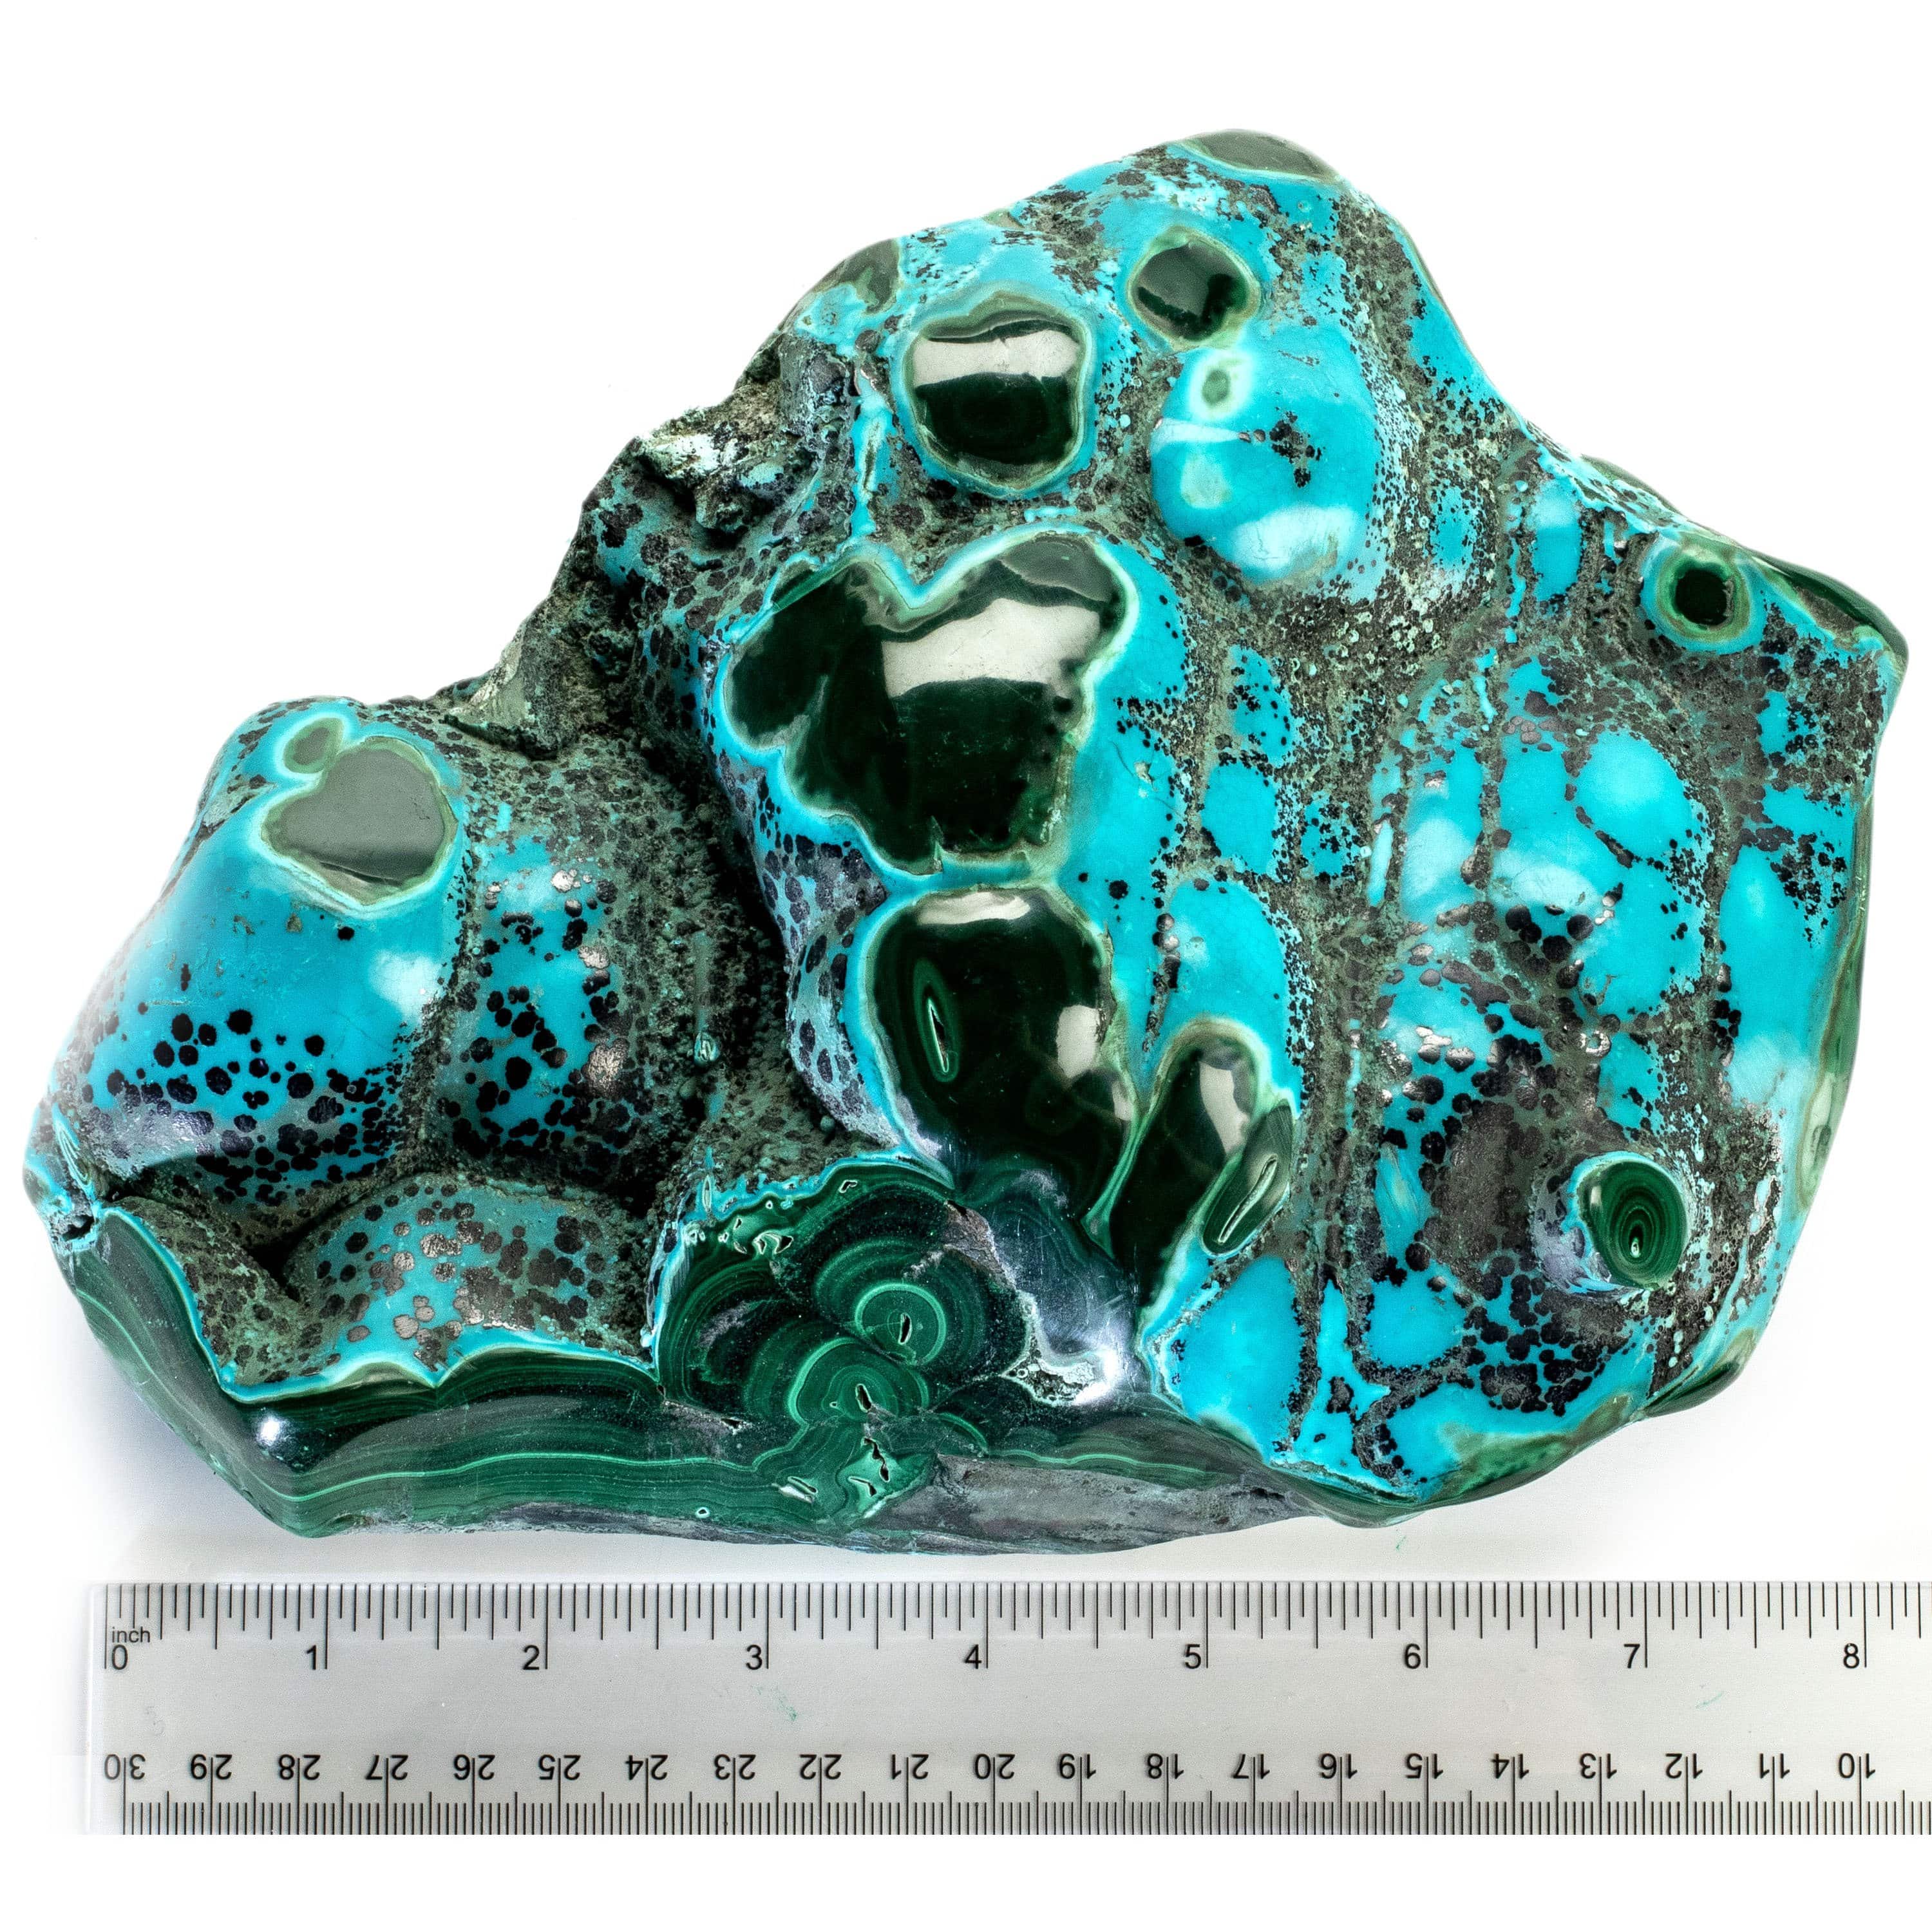 Kalifano Malachite Rare Natural Green Malachite with Blue Chrysocolla Freeform Specimen from Congo - 3.2 kg / 7 lbs MAC2500.001